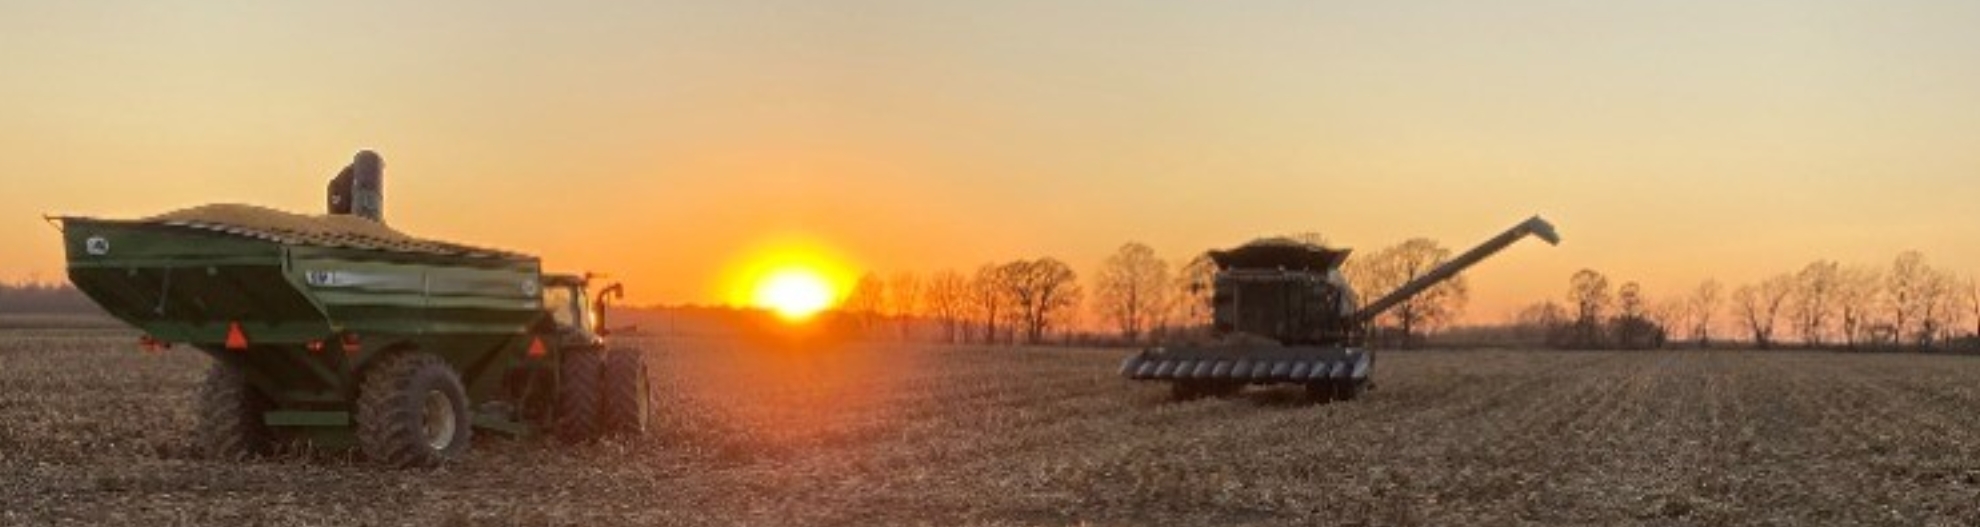 Farm at sunset